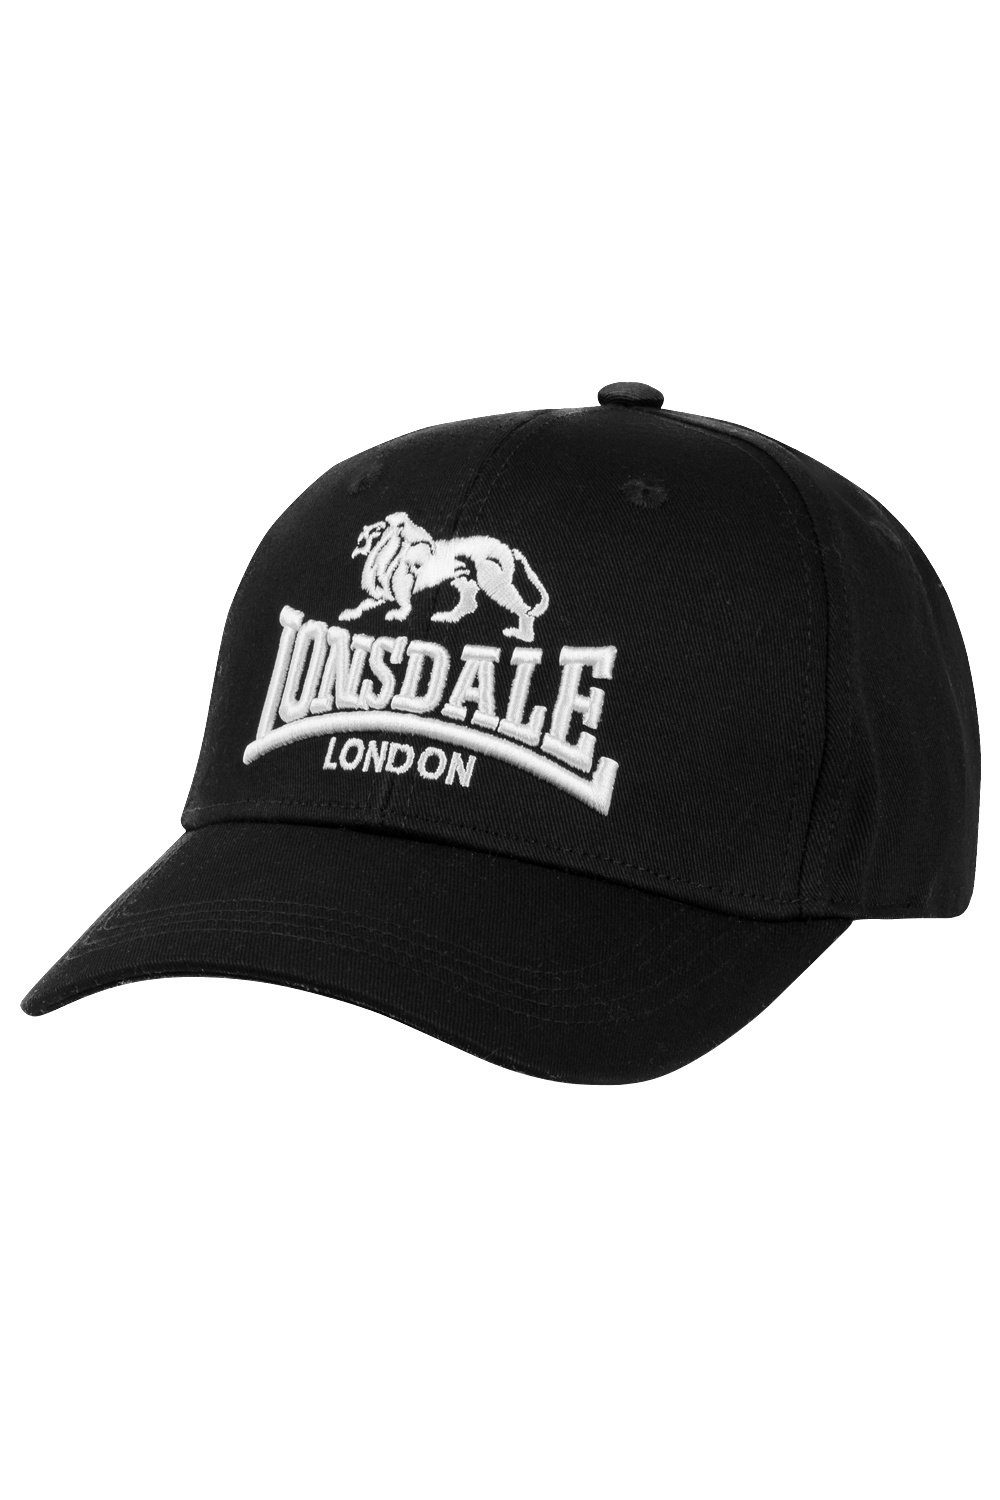 Lonsdale Baseball Cap Lonsdale Unisex SALFORD black/white Cap